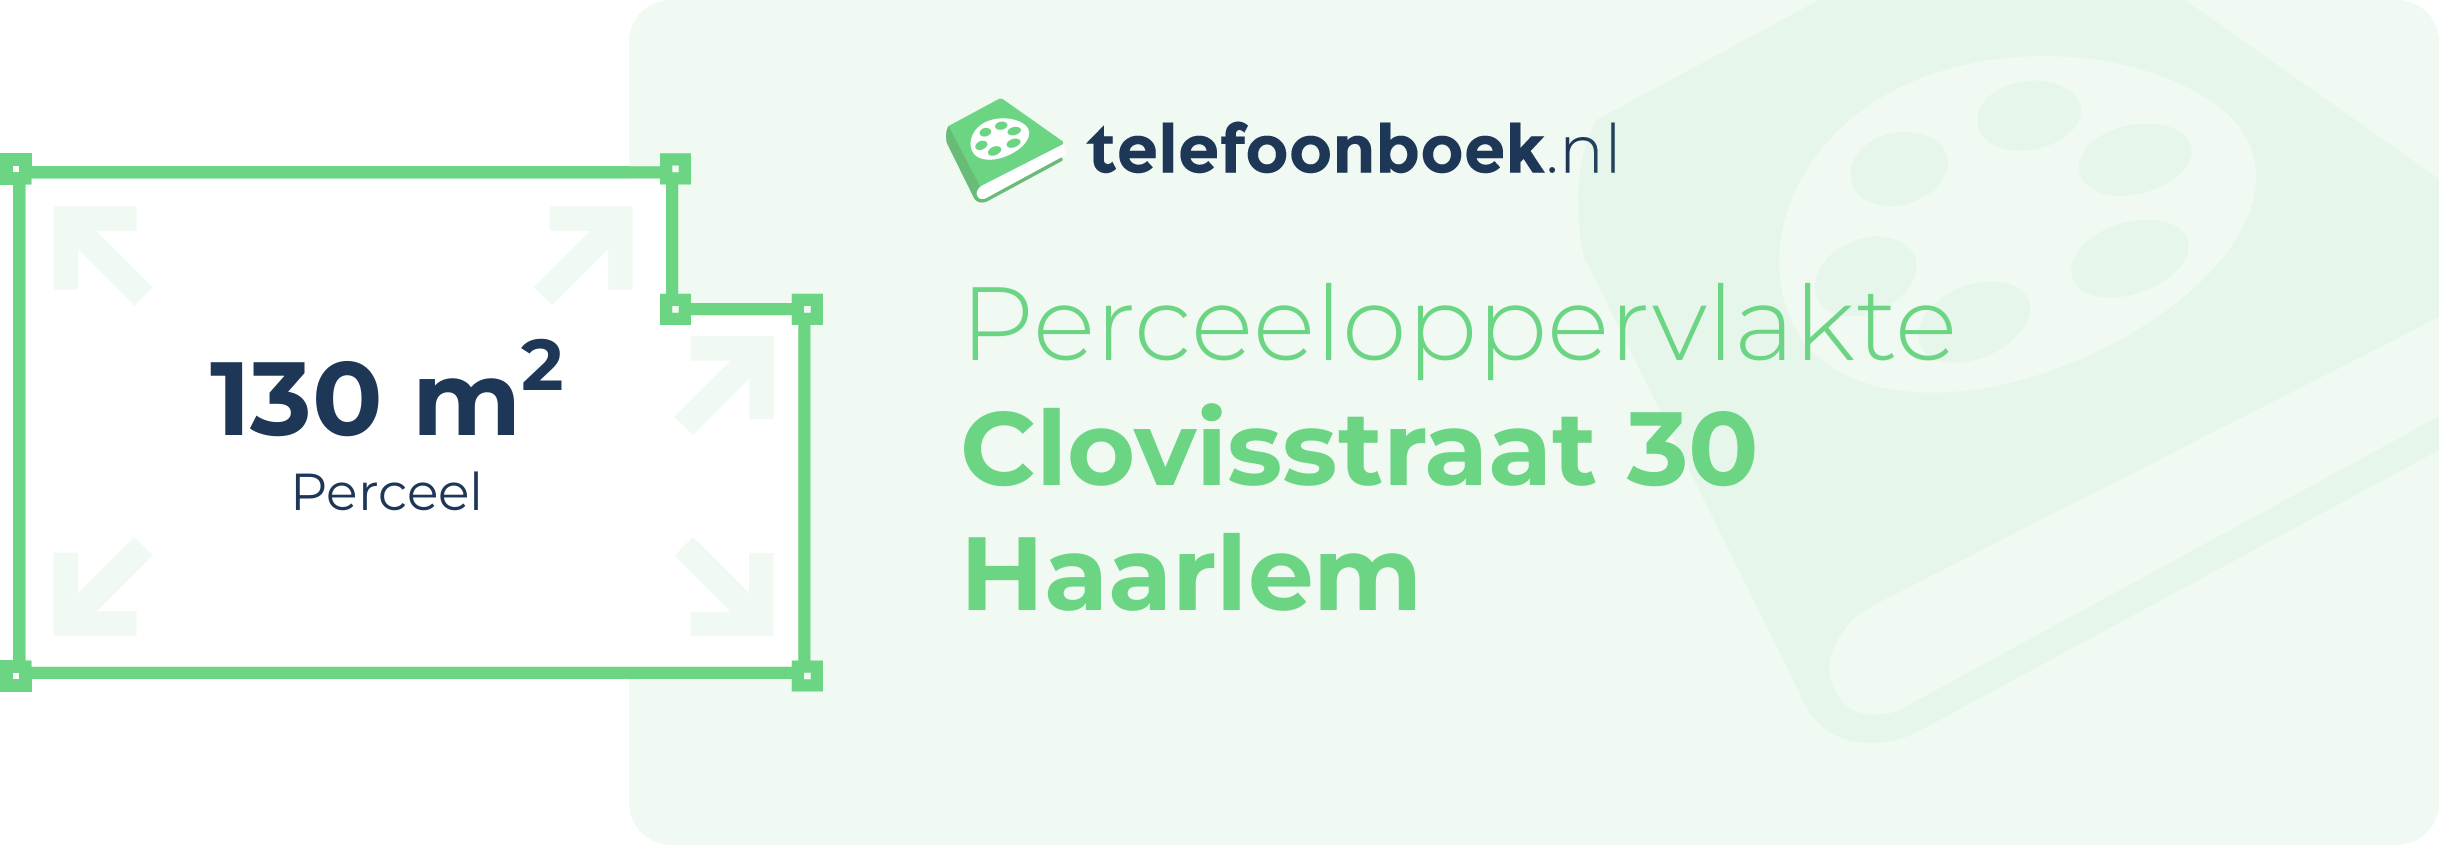 Perceeloppervlakte Clovisstraat 30 Haarlem